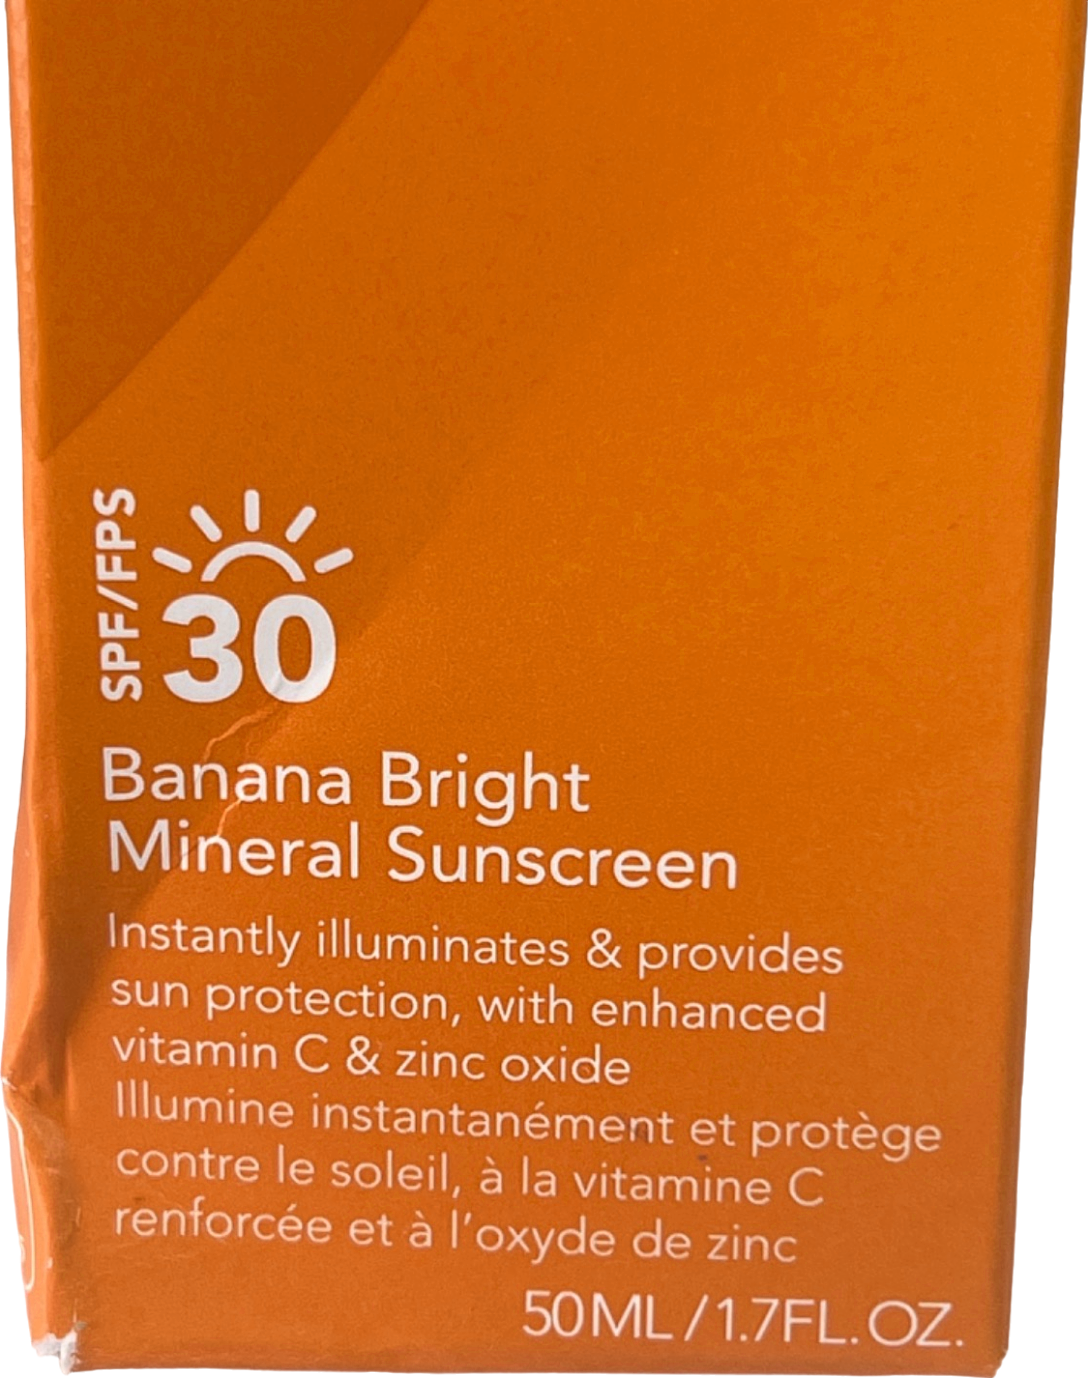 OLEHENRIKSEN Banana Bright Mineral Sunscreen SPF 30 50ml